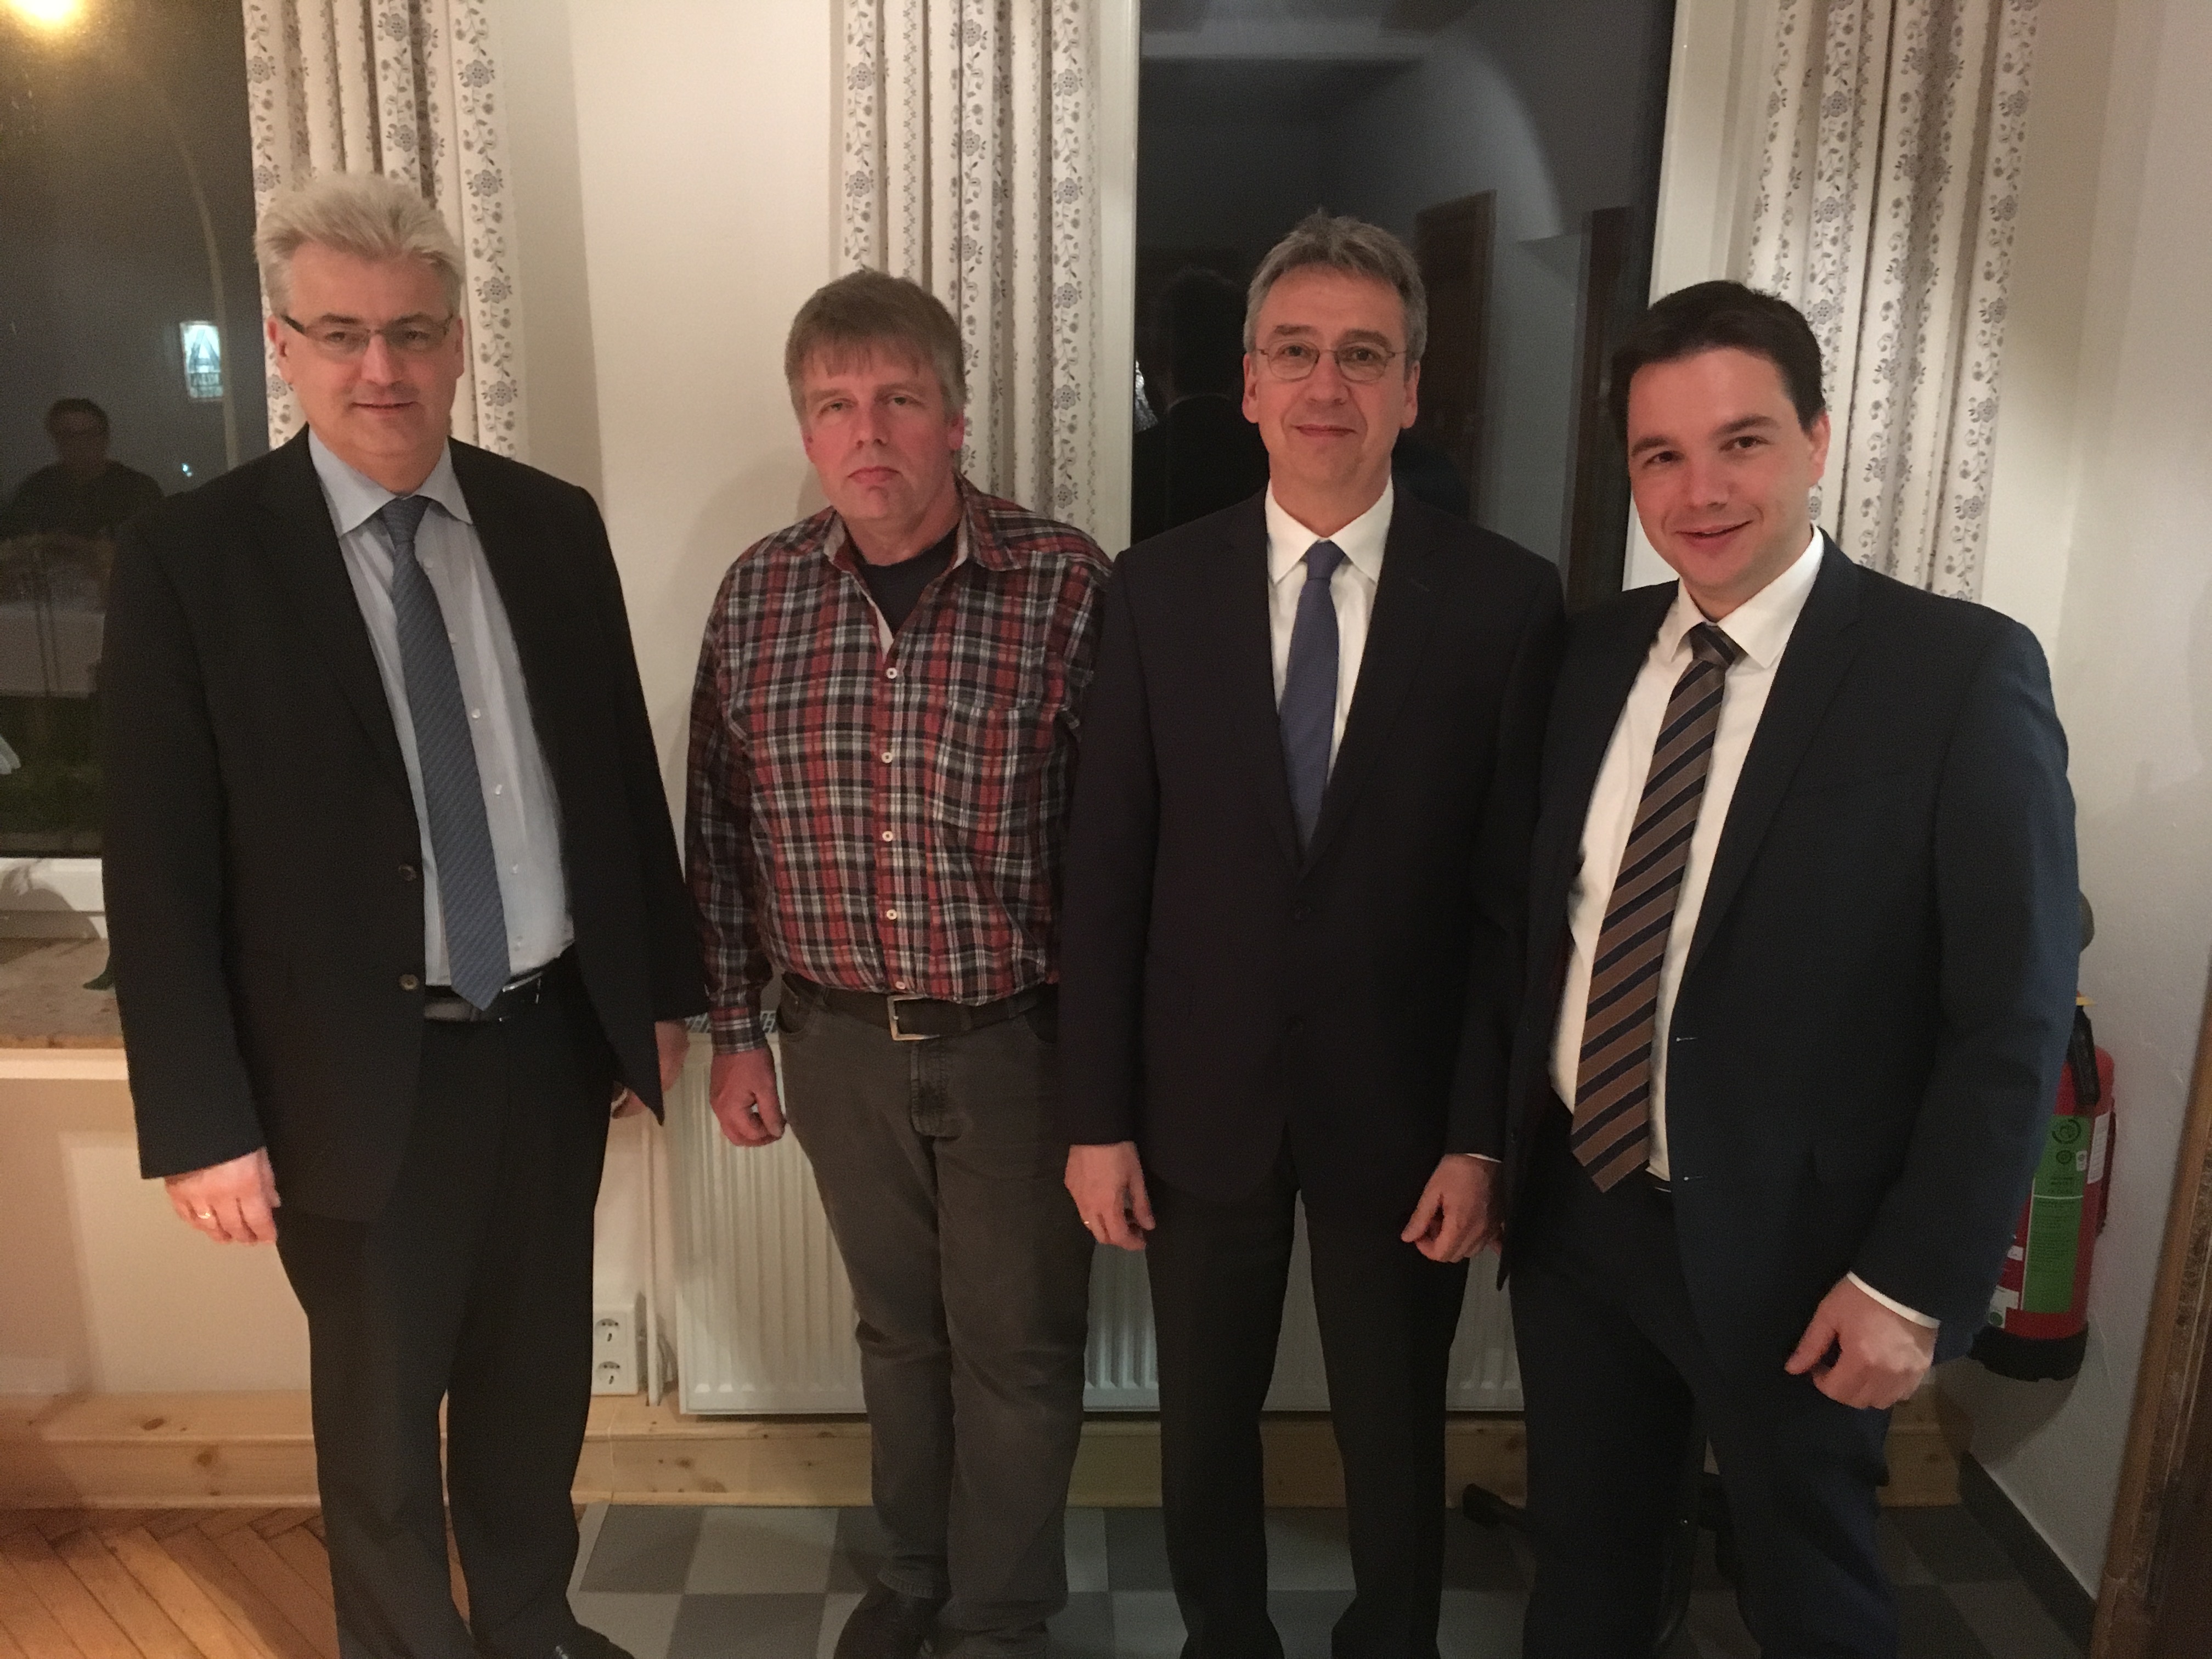 Das Gruppenbild zeigt Axel Knoerig MdB, Wolfgang Johanning, Präsident des Bundeskartellamts Andreas Mundt und CDU-Landtagskandidat Marcel Scharrelmann (v.l.).